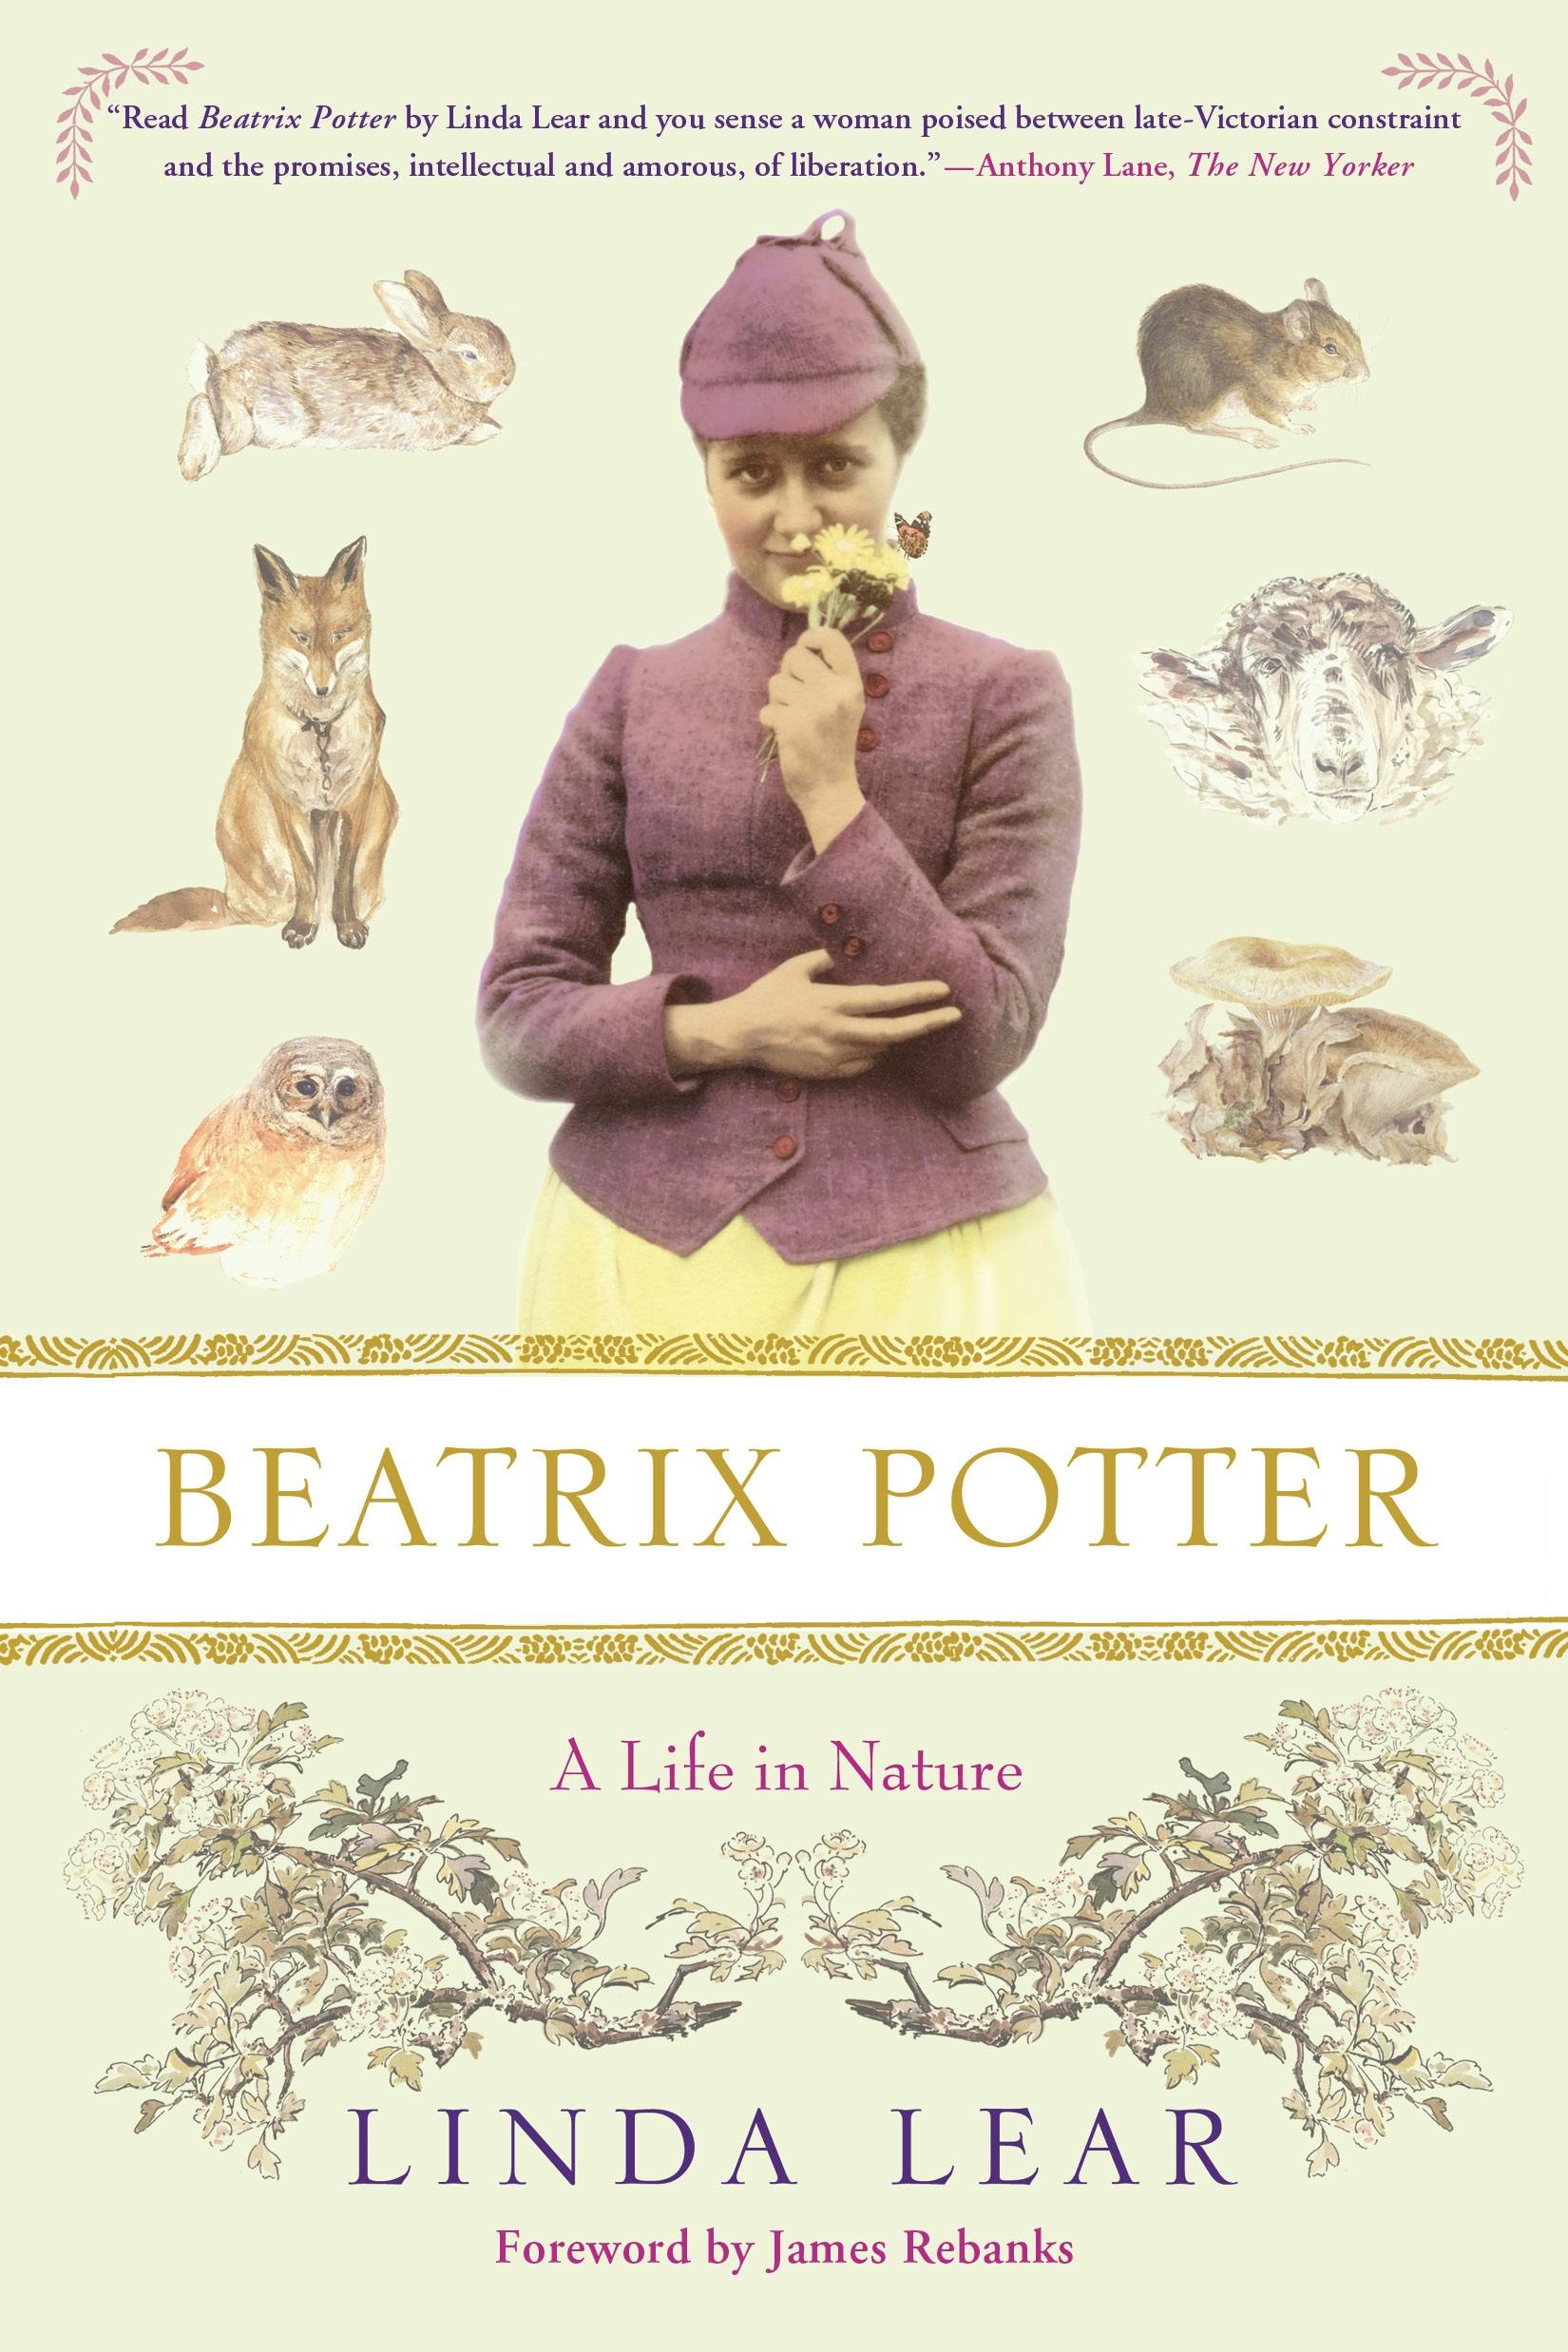 The Real Beatrix Potter